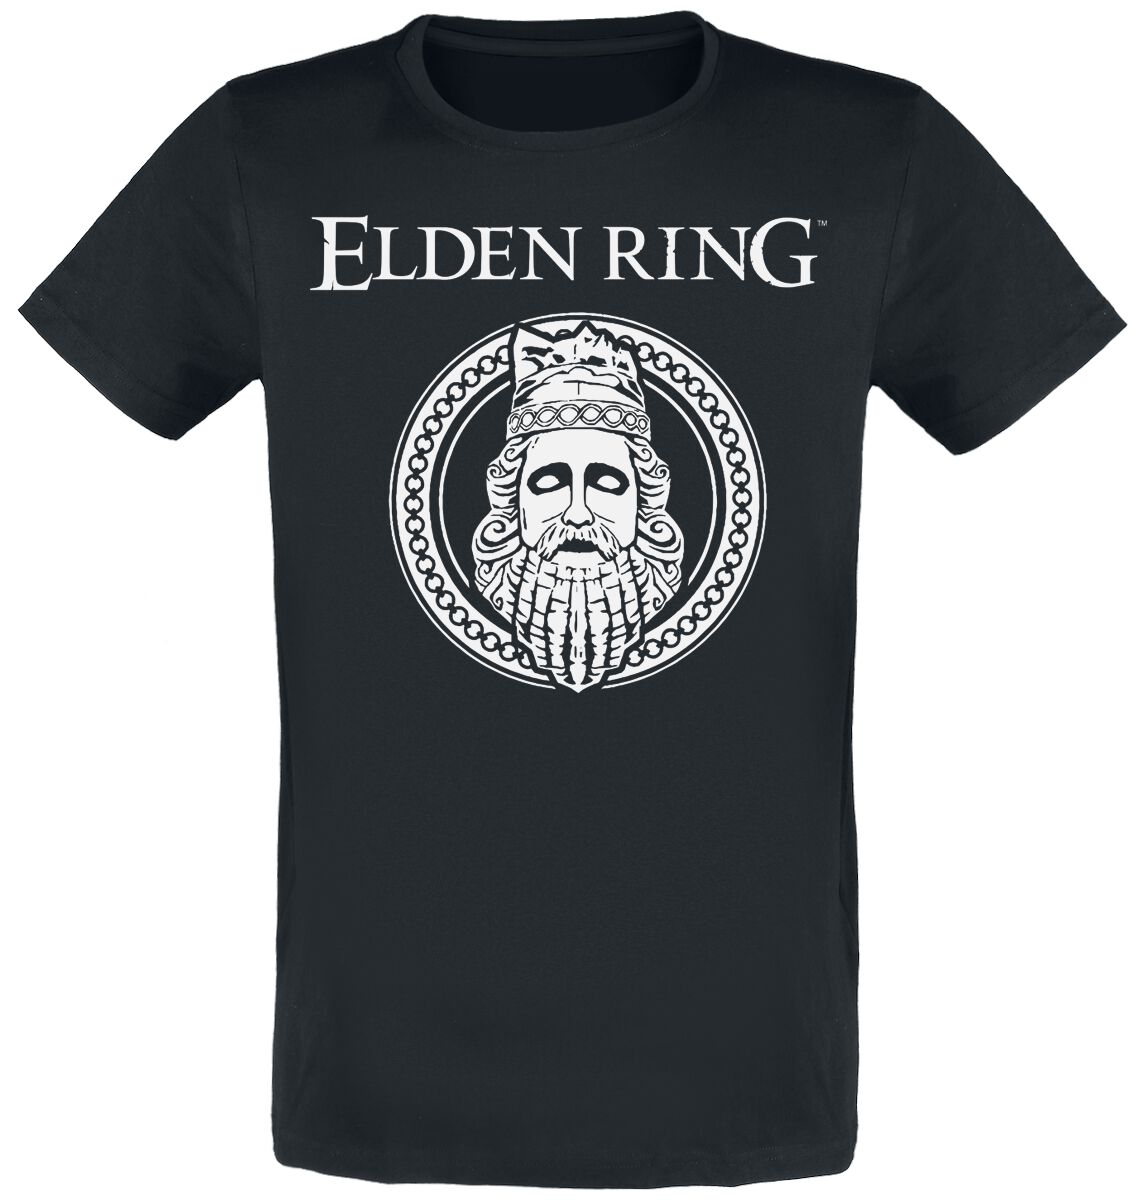 Elden Ring King T-Shirt schwarz in S